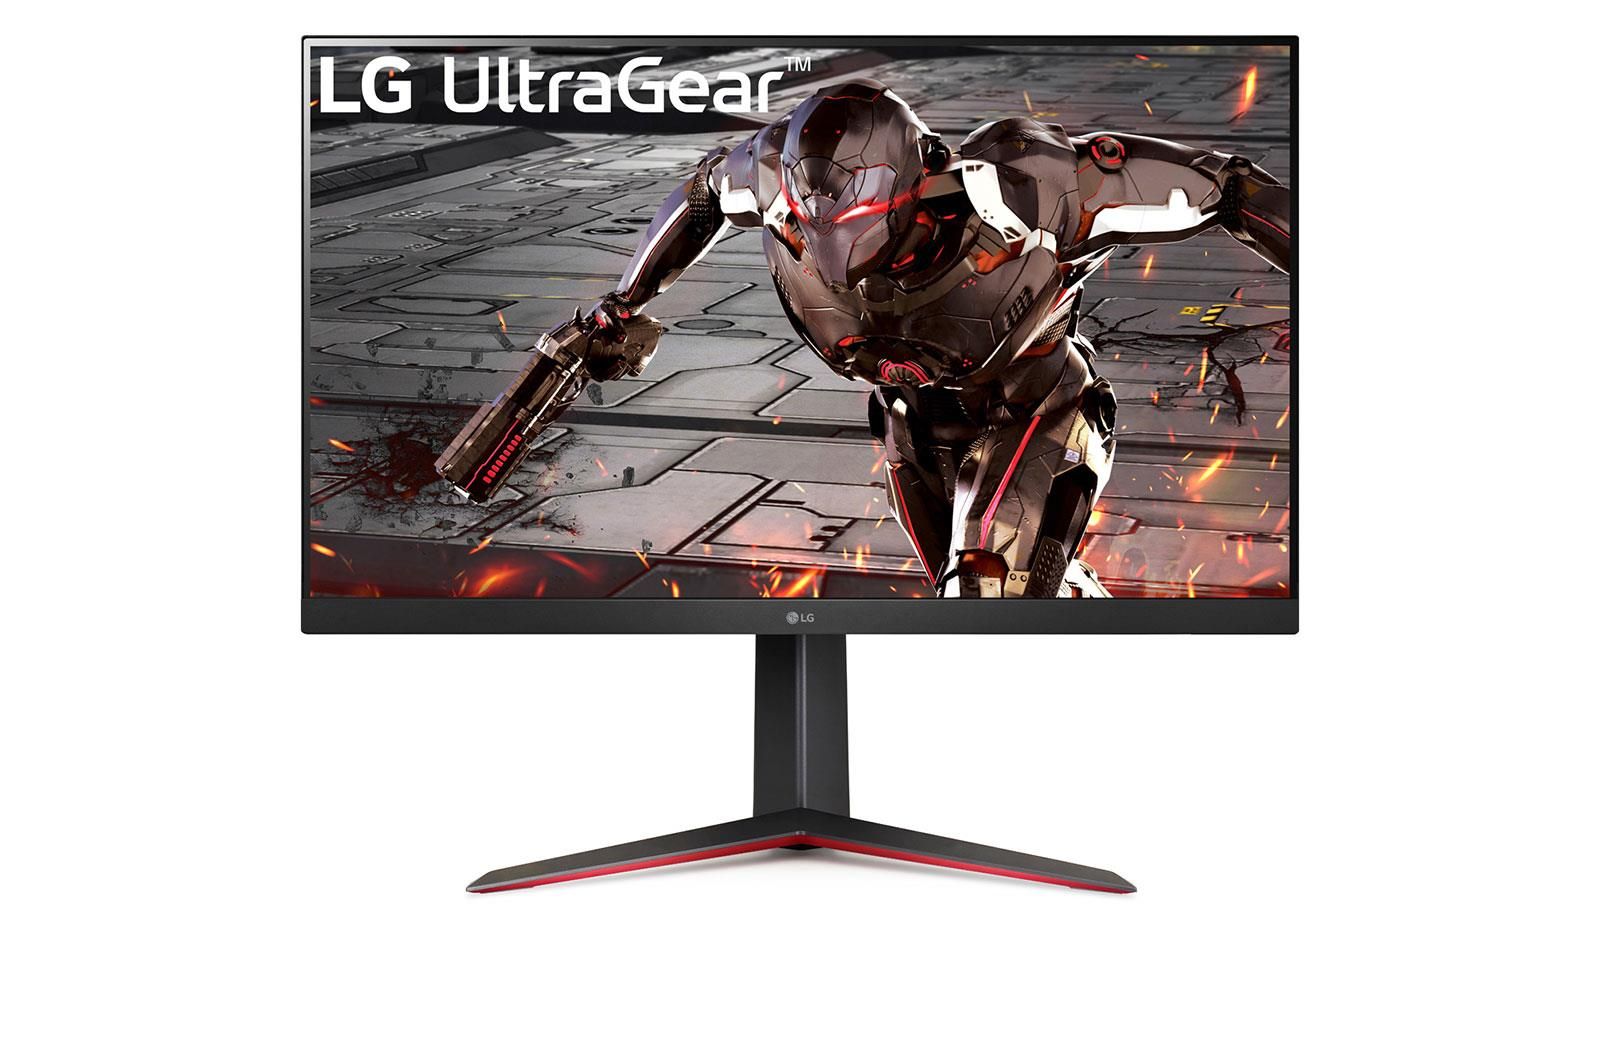 LG 32GN650 UltraGear Gaming